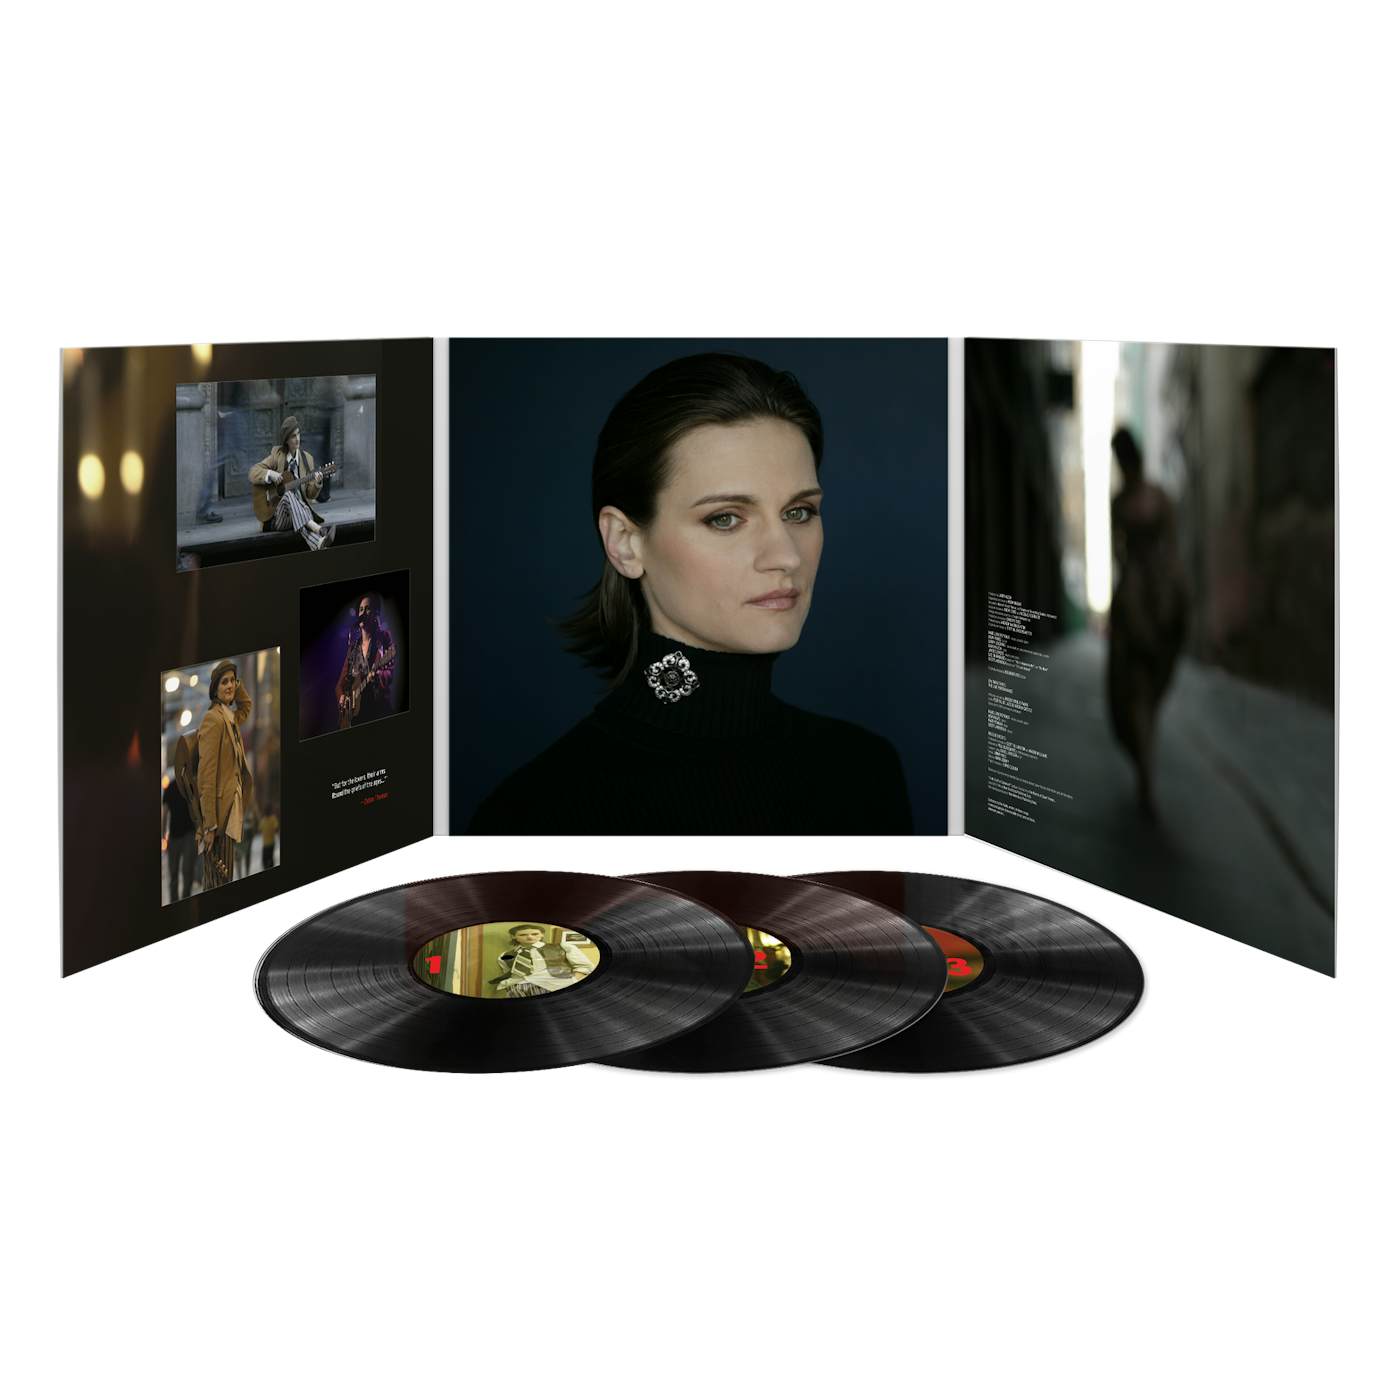 Madeleine Peyroux Careless Love: Deluxe Edition (180g 3-LP Black Vinyl)